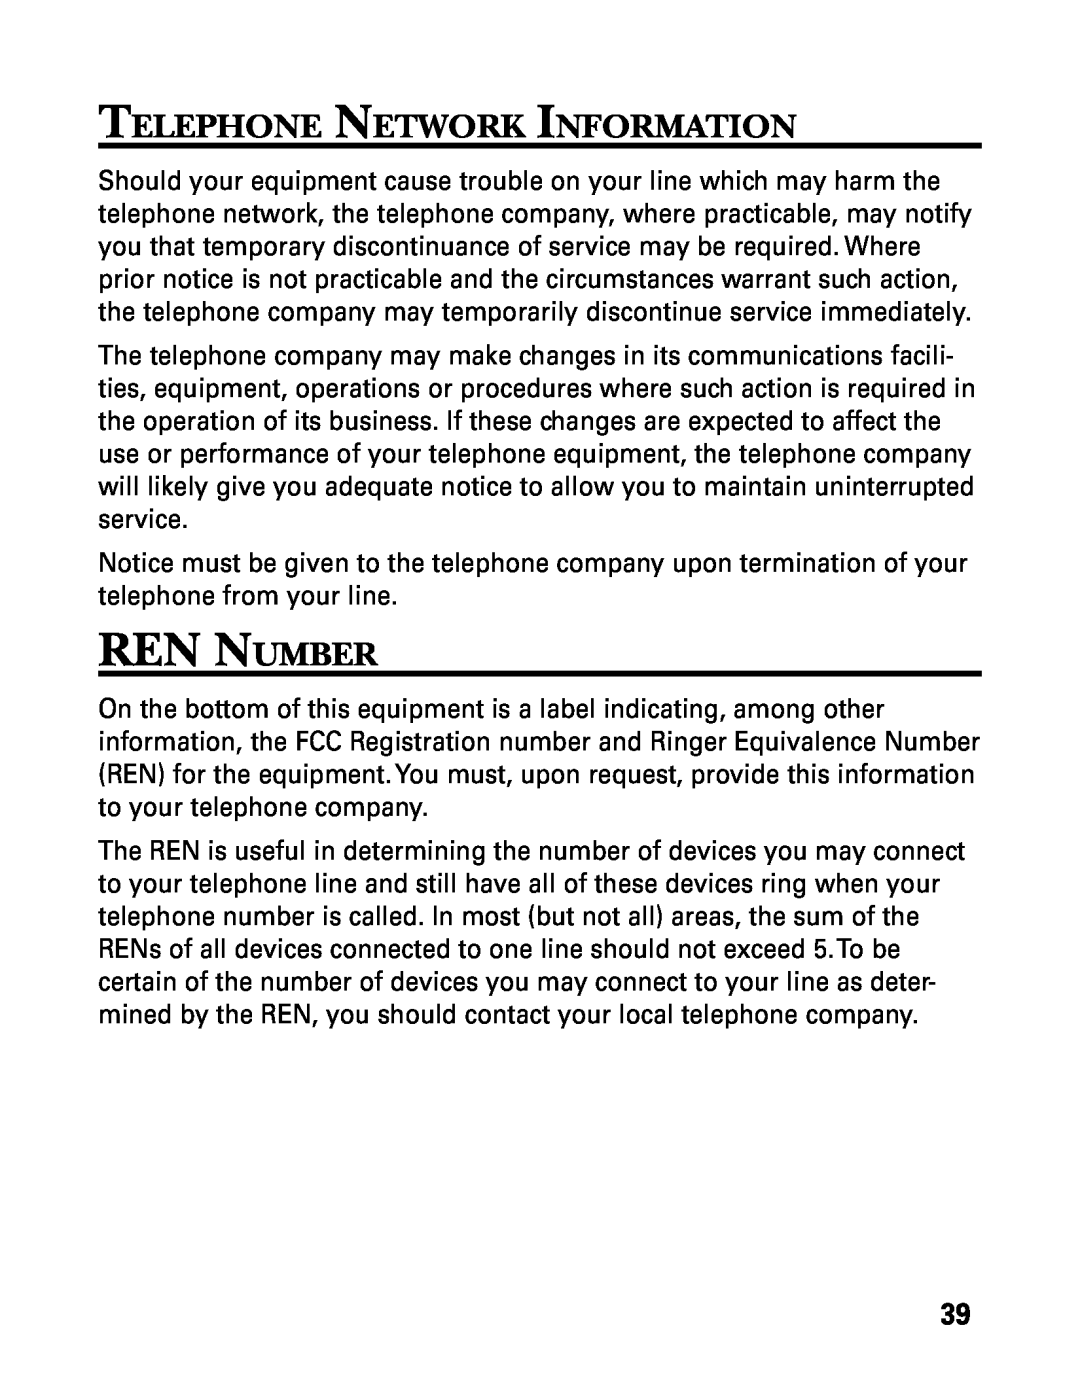 GE 27730 manual Telephone Network Information, Ren Number 